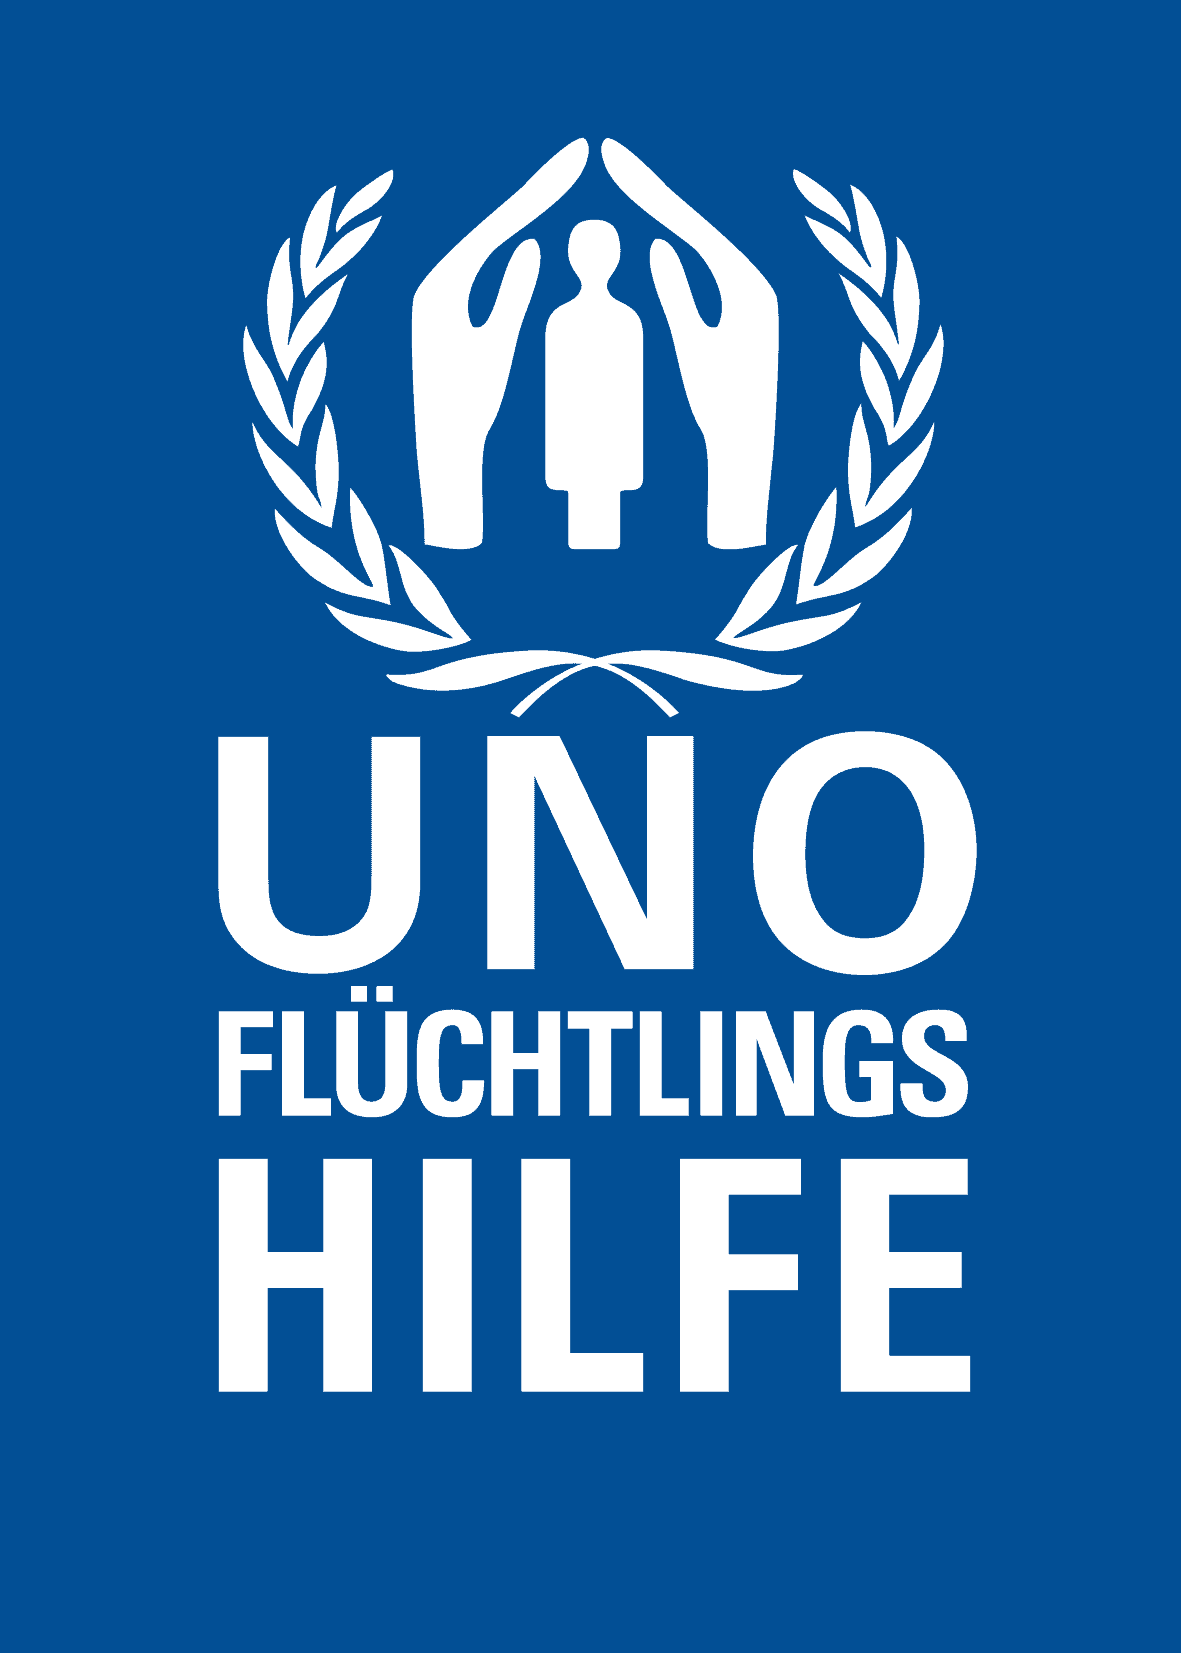 Logo UNO-Flüchtlingshilfe